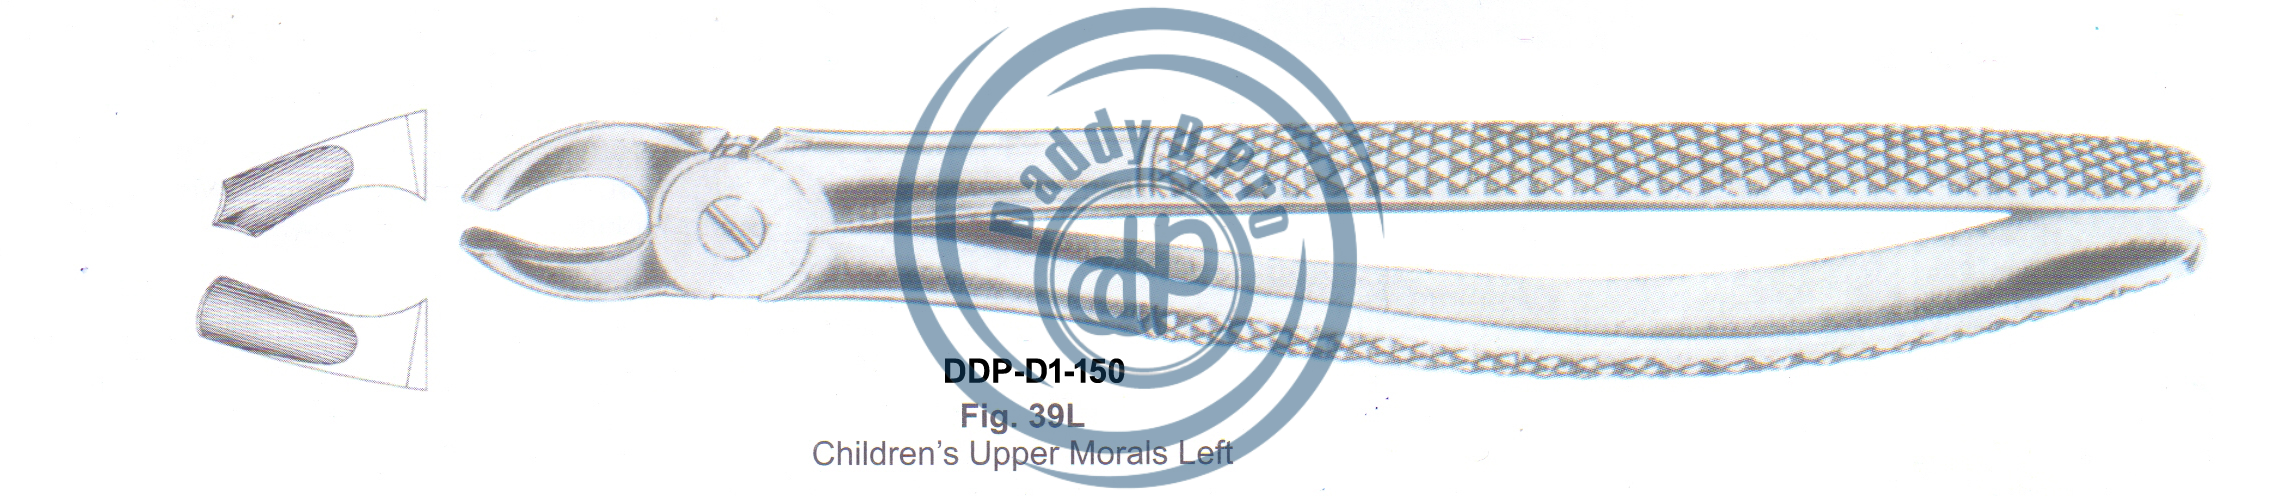 images/DDP-D1-150.png